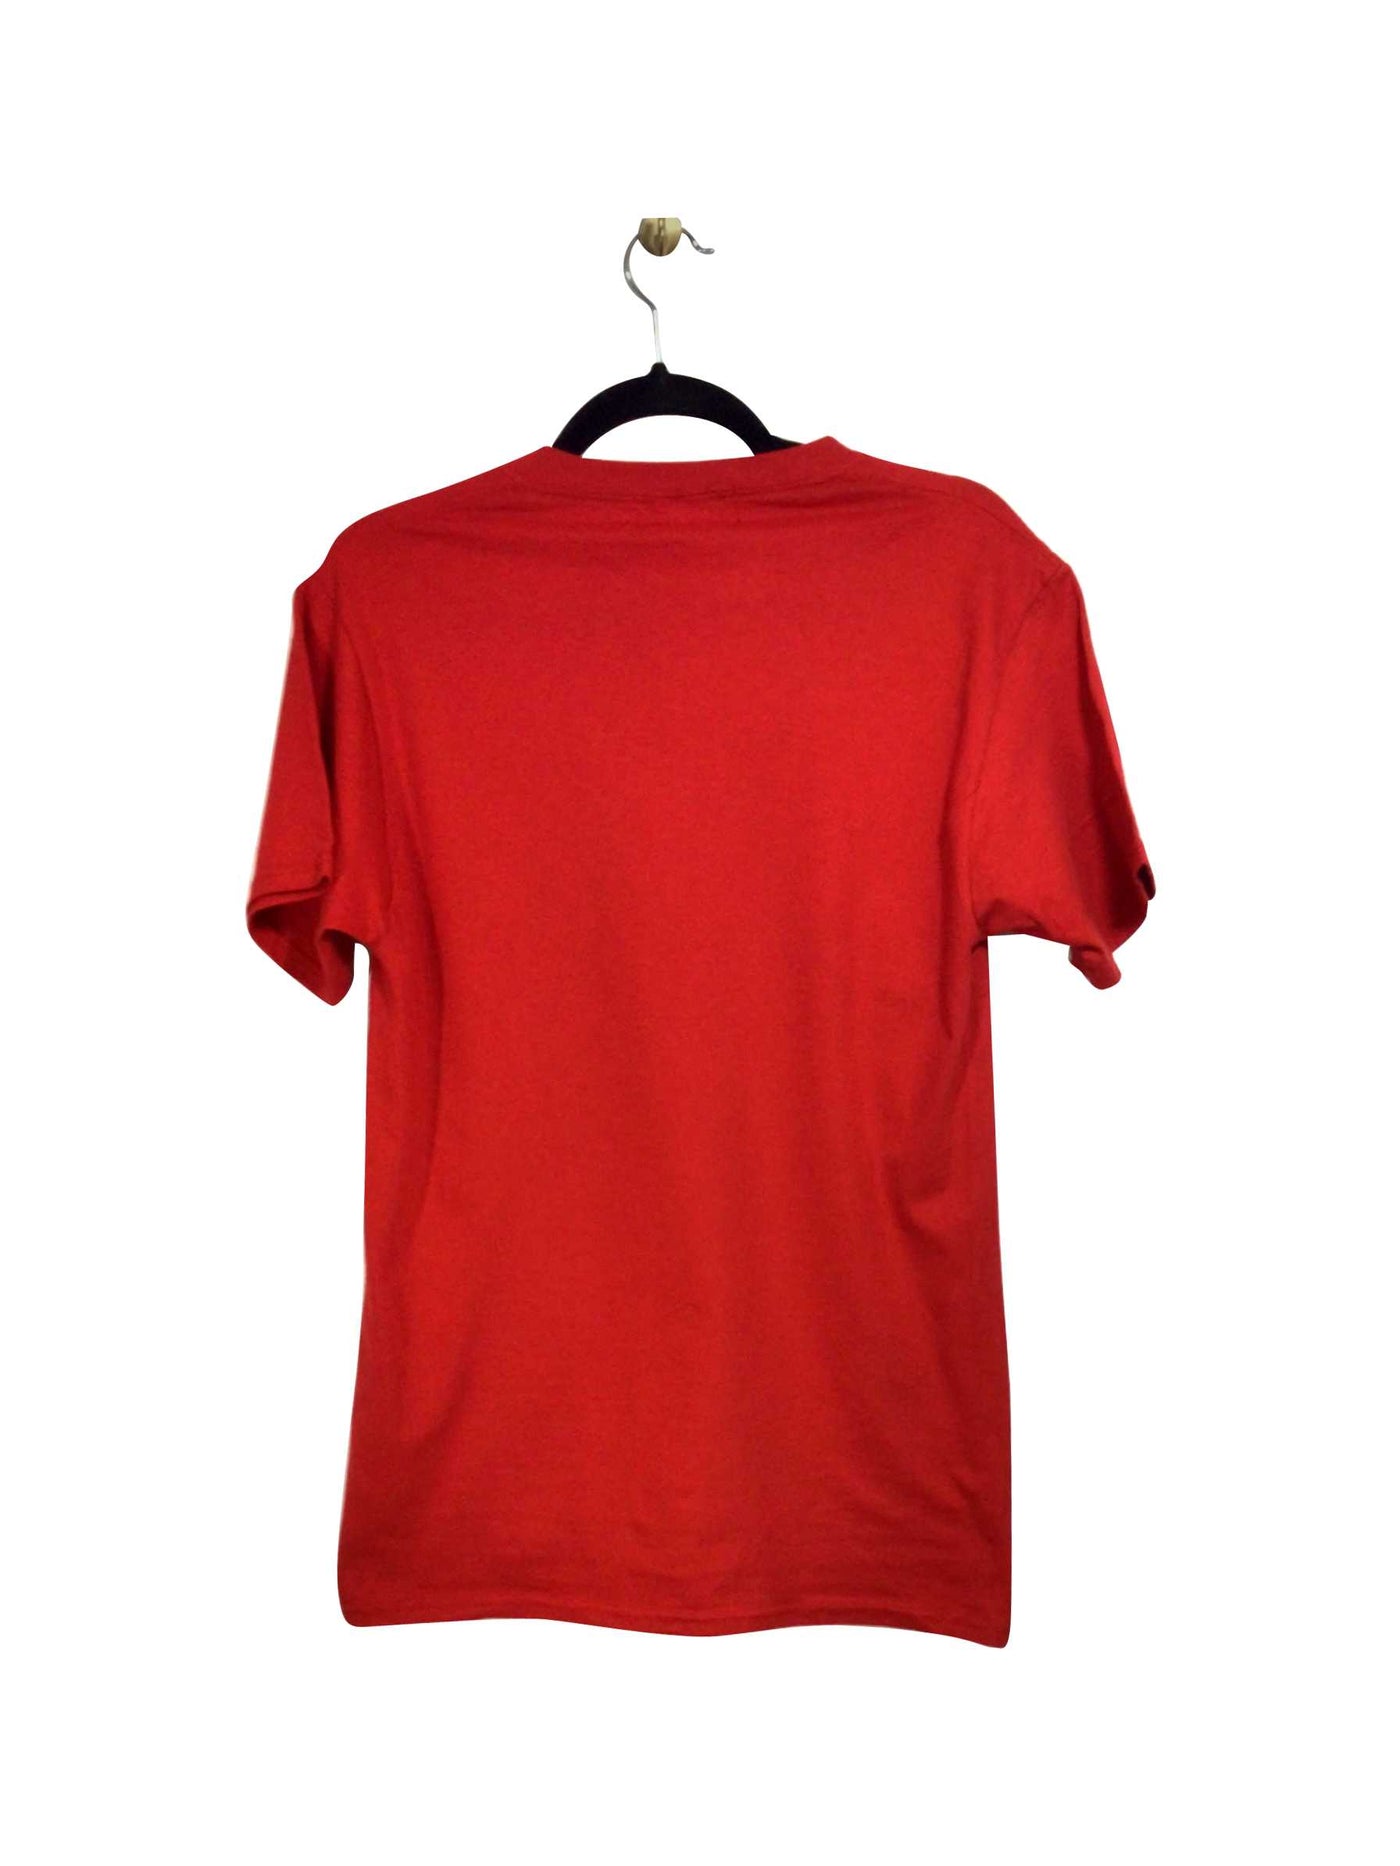 DUBWEAR CLOTHING CO. Regular fit T-shirt in Red - Size XXL | 15 $ KOOP